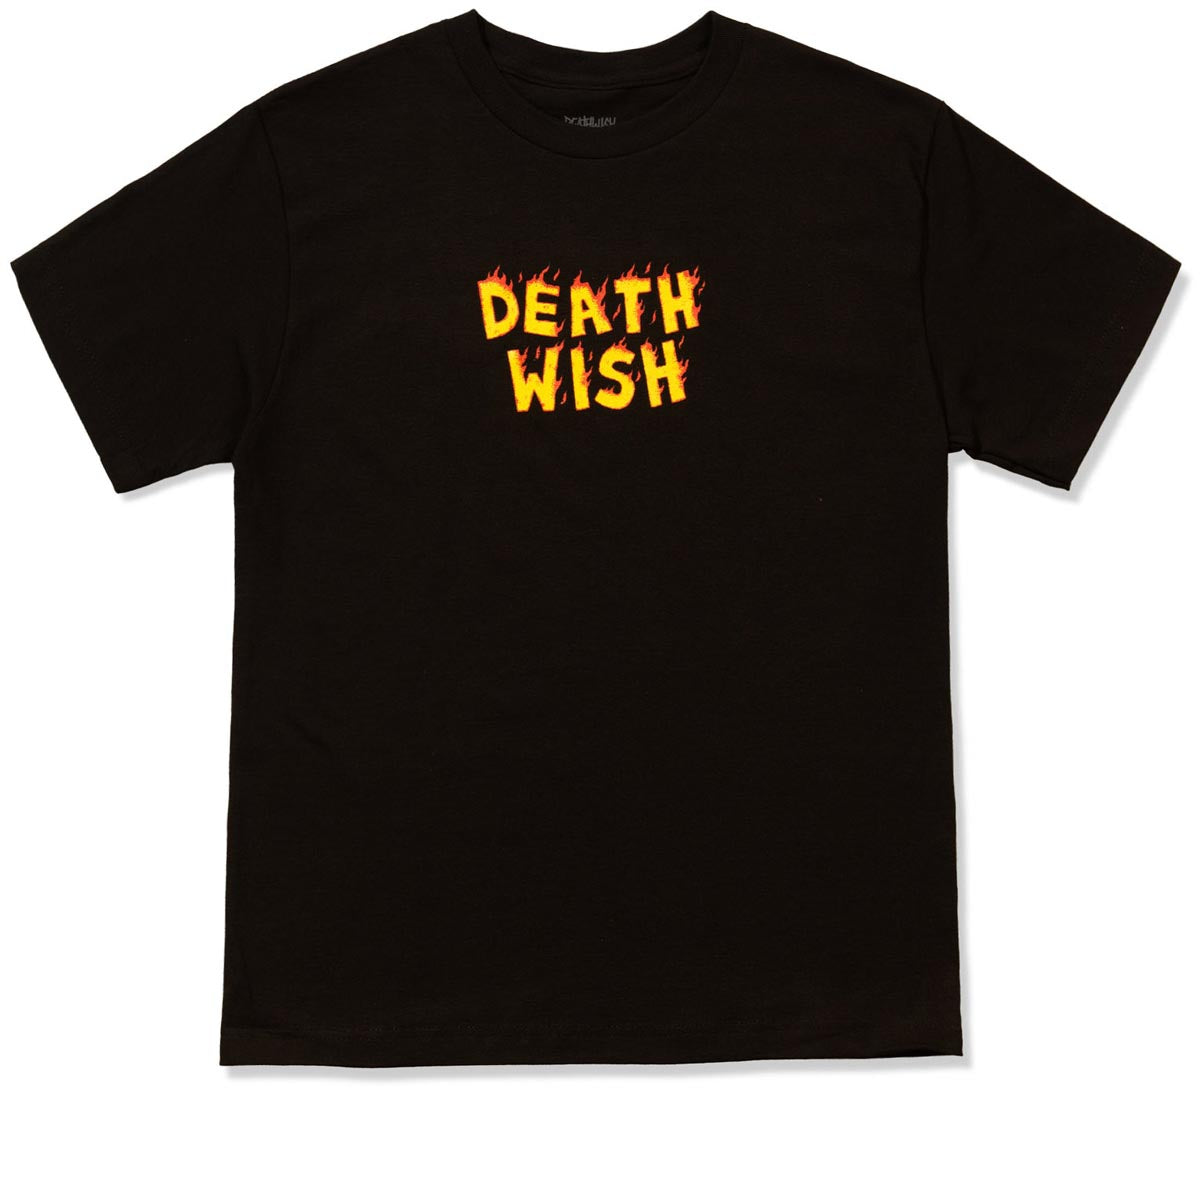 Deathwish Mind Wars T-Shirt - Black image 1